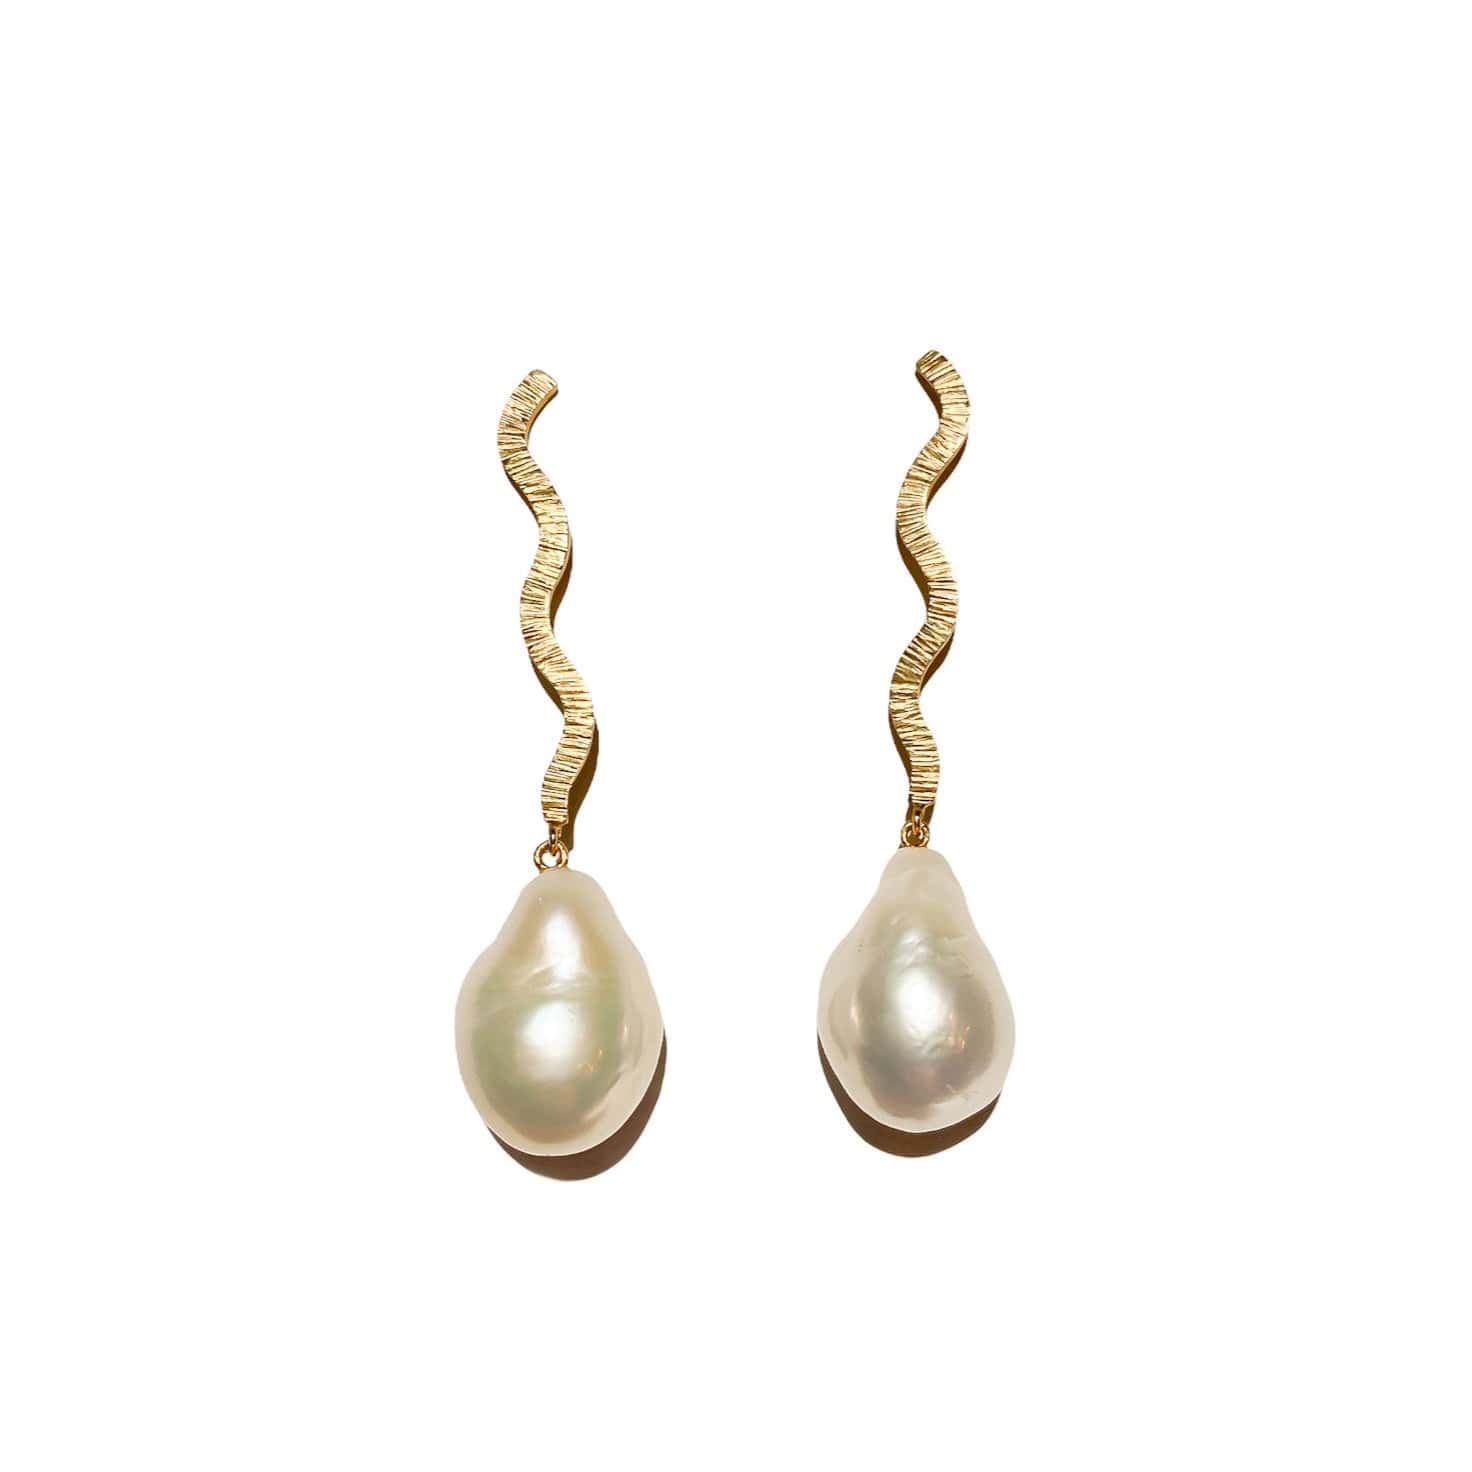 Shape Baroque Medium gold plated pearl earrings.